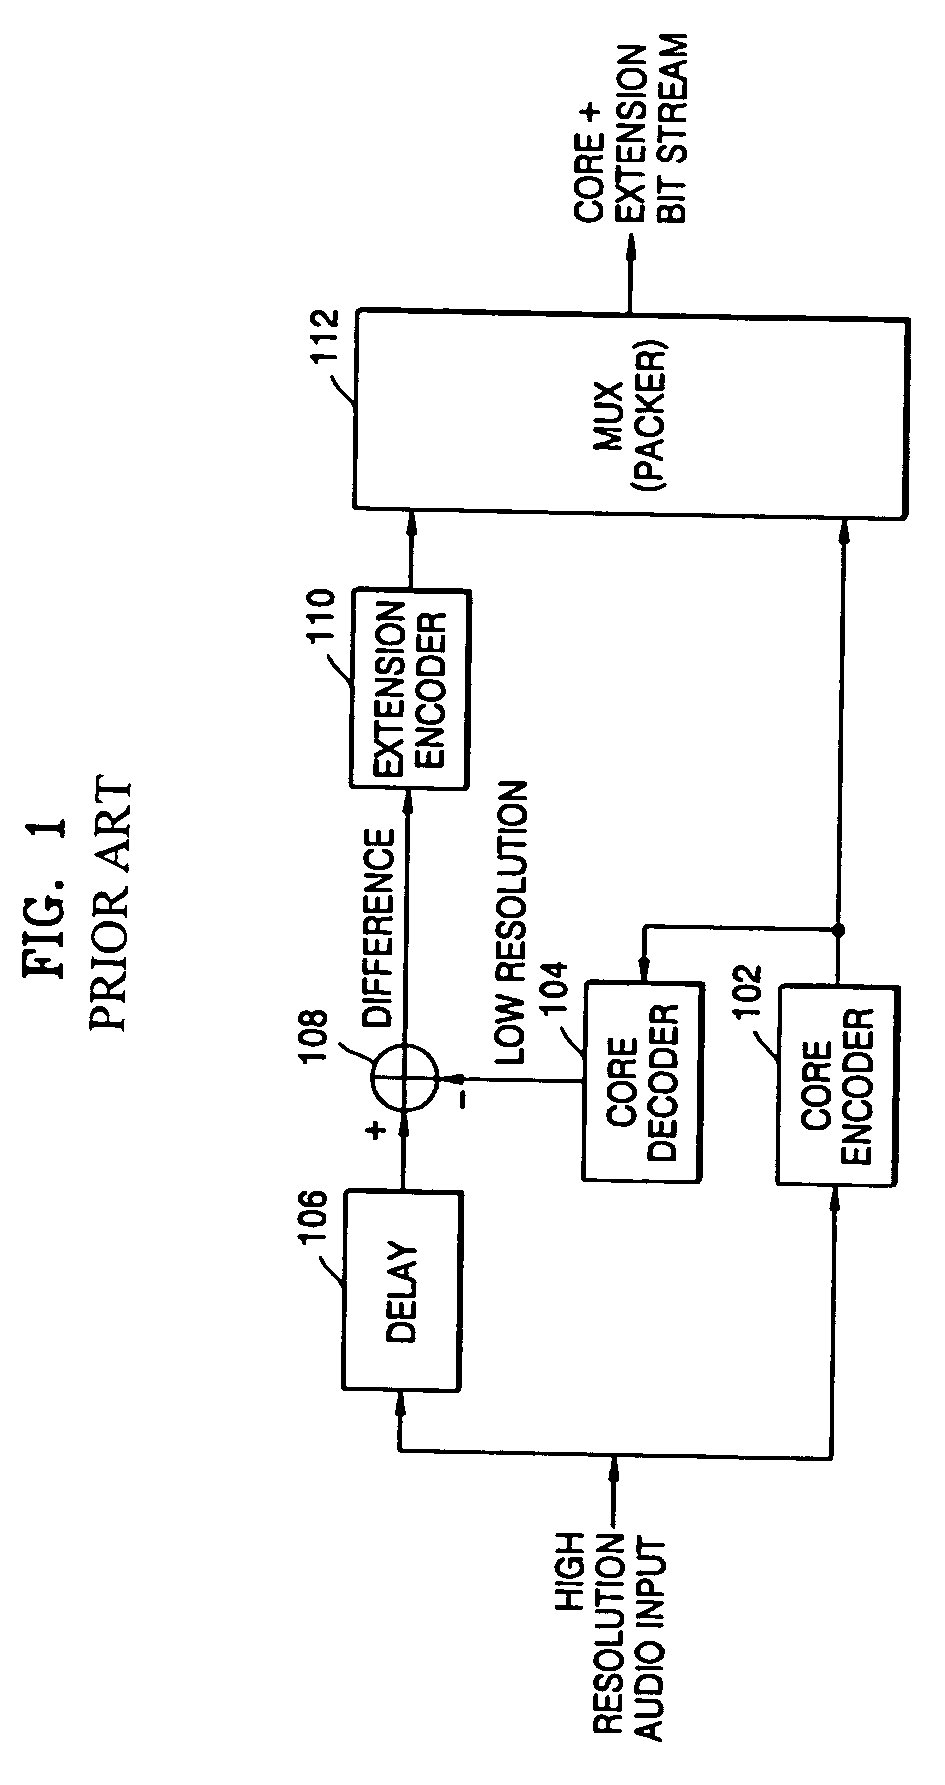 Audio signal encoding and decoding apparatus